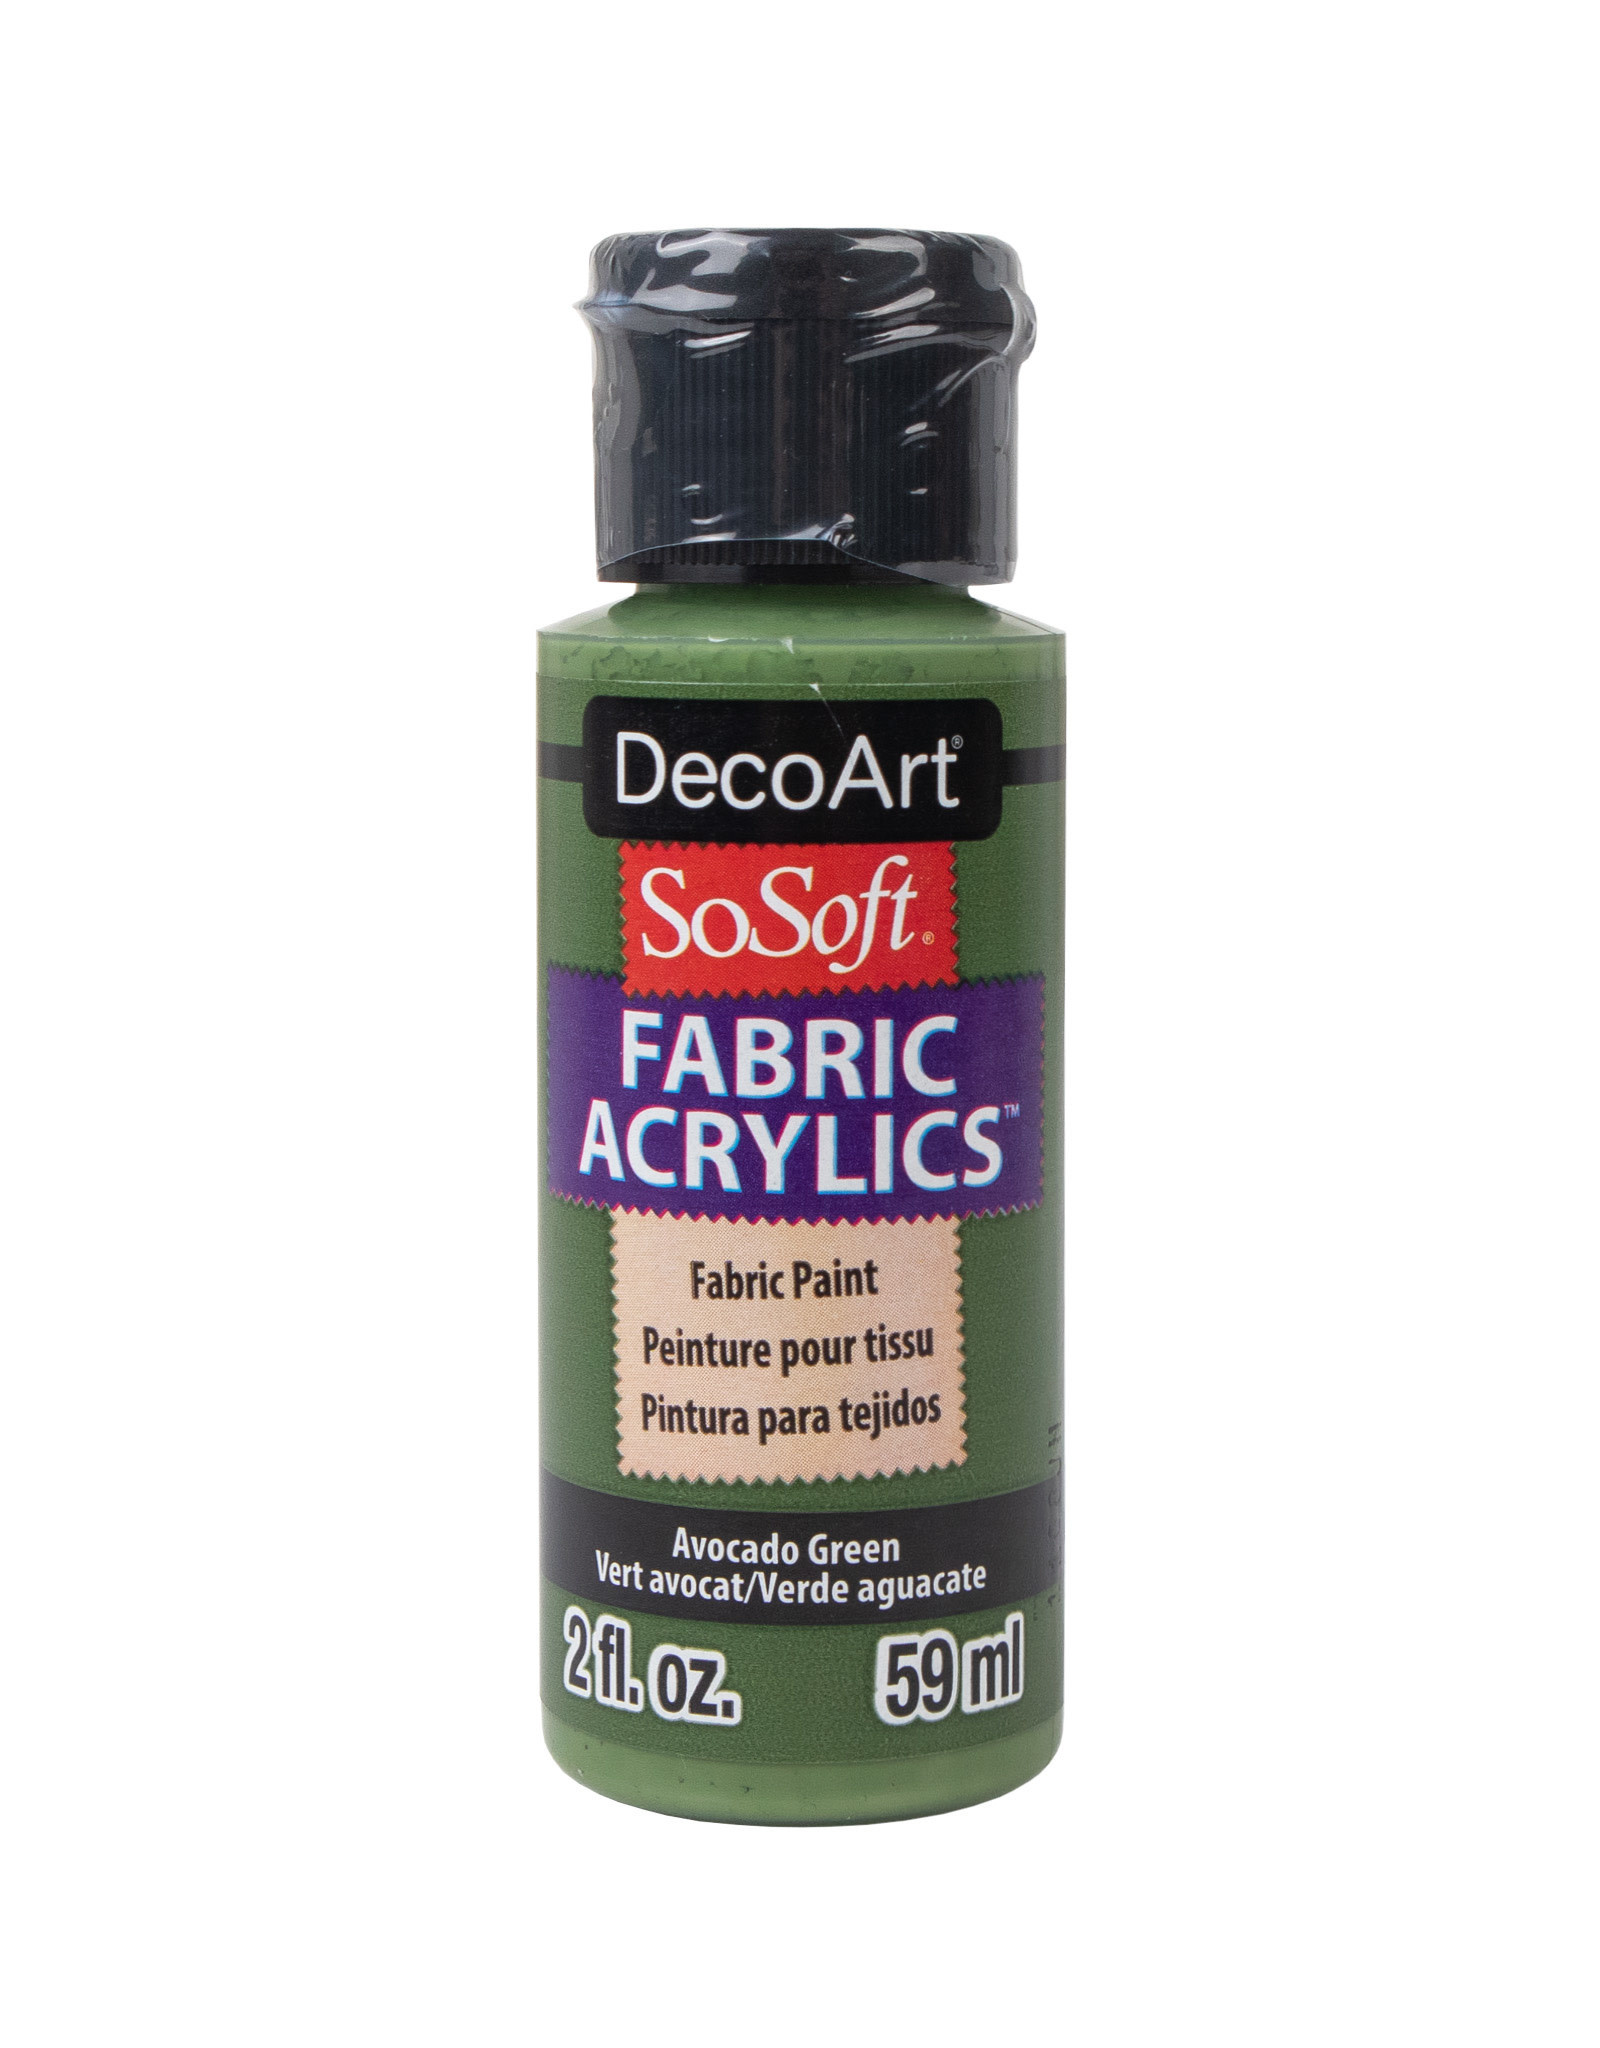 DecoArt DecoArt SoSoft Fabric Acrylics, Avocado Green 2oz